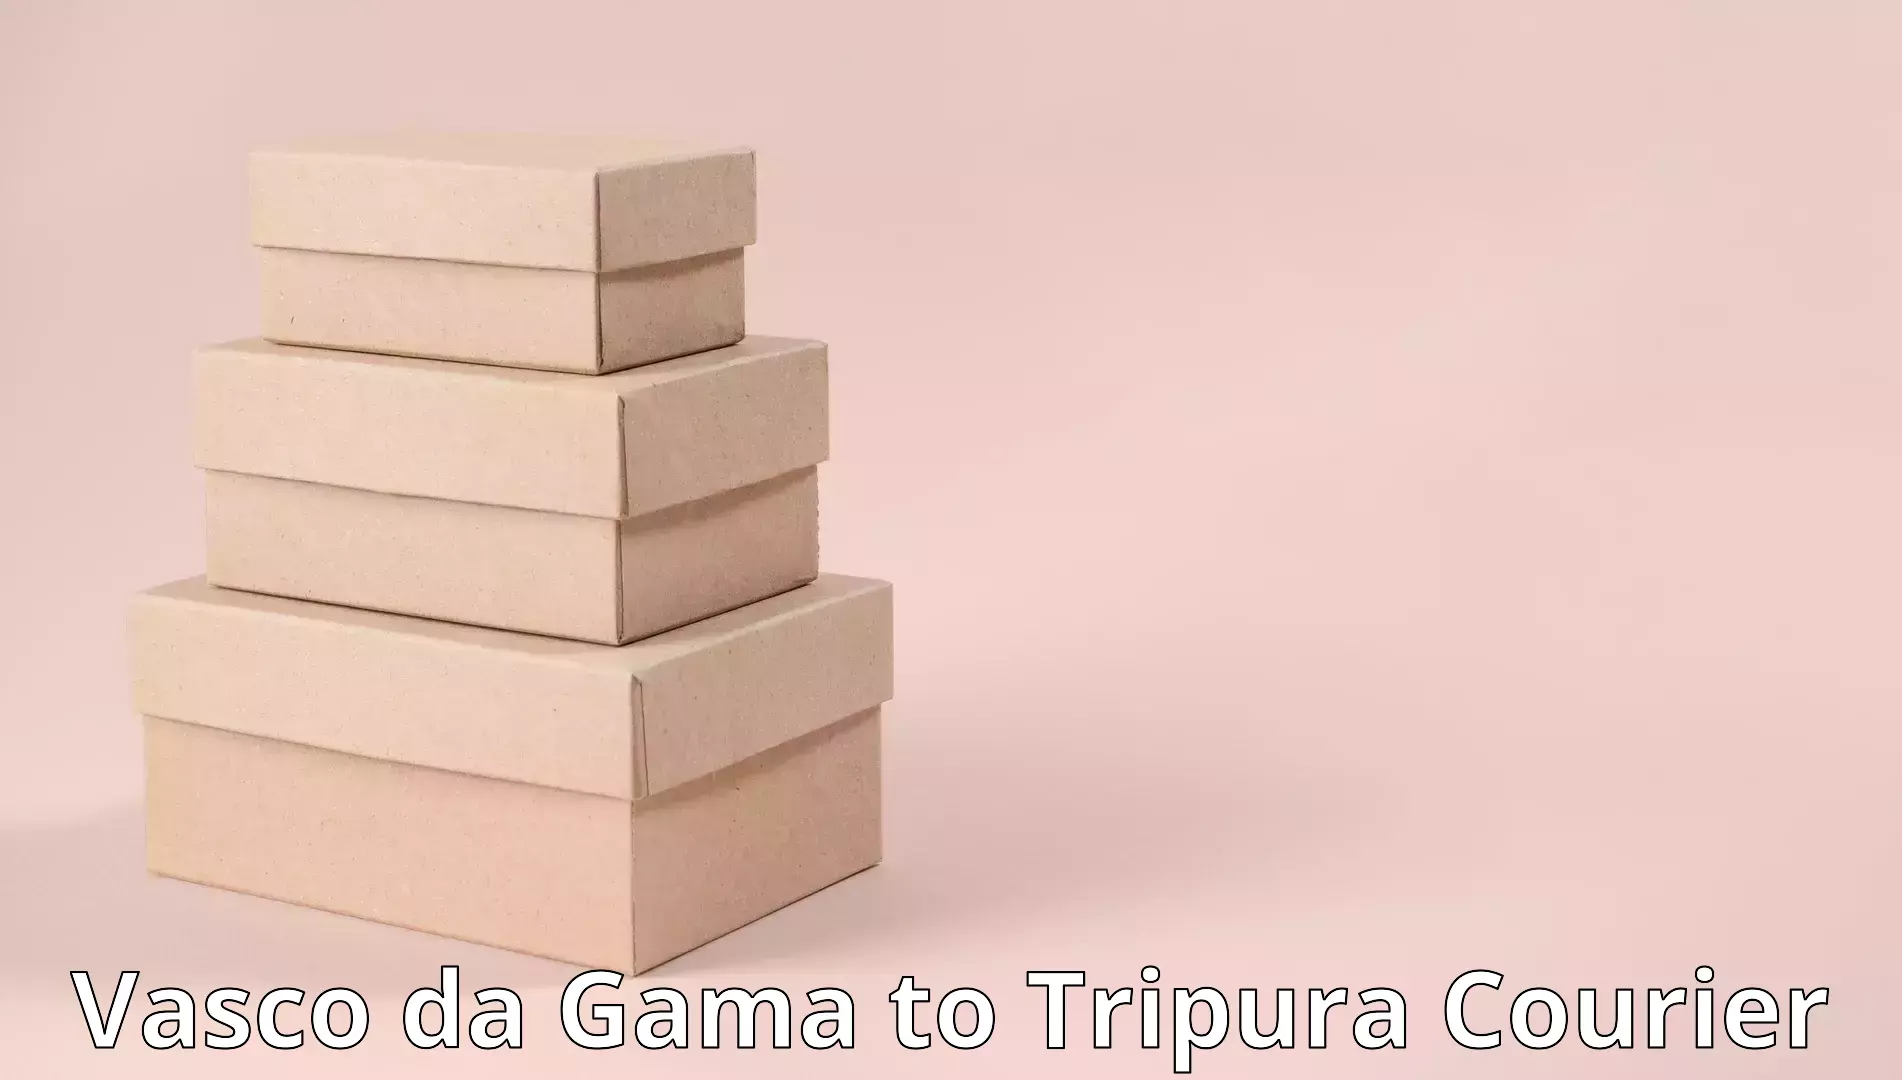 Professional furniture movers Vasco da Gama to Tripura